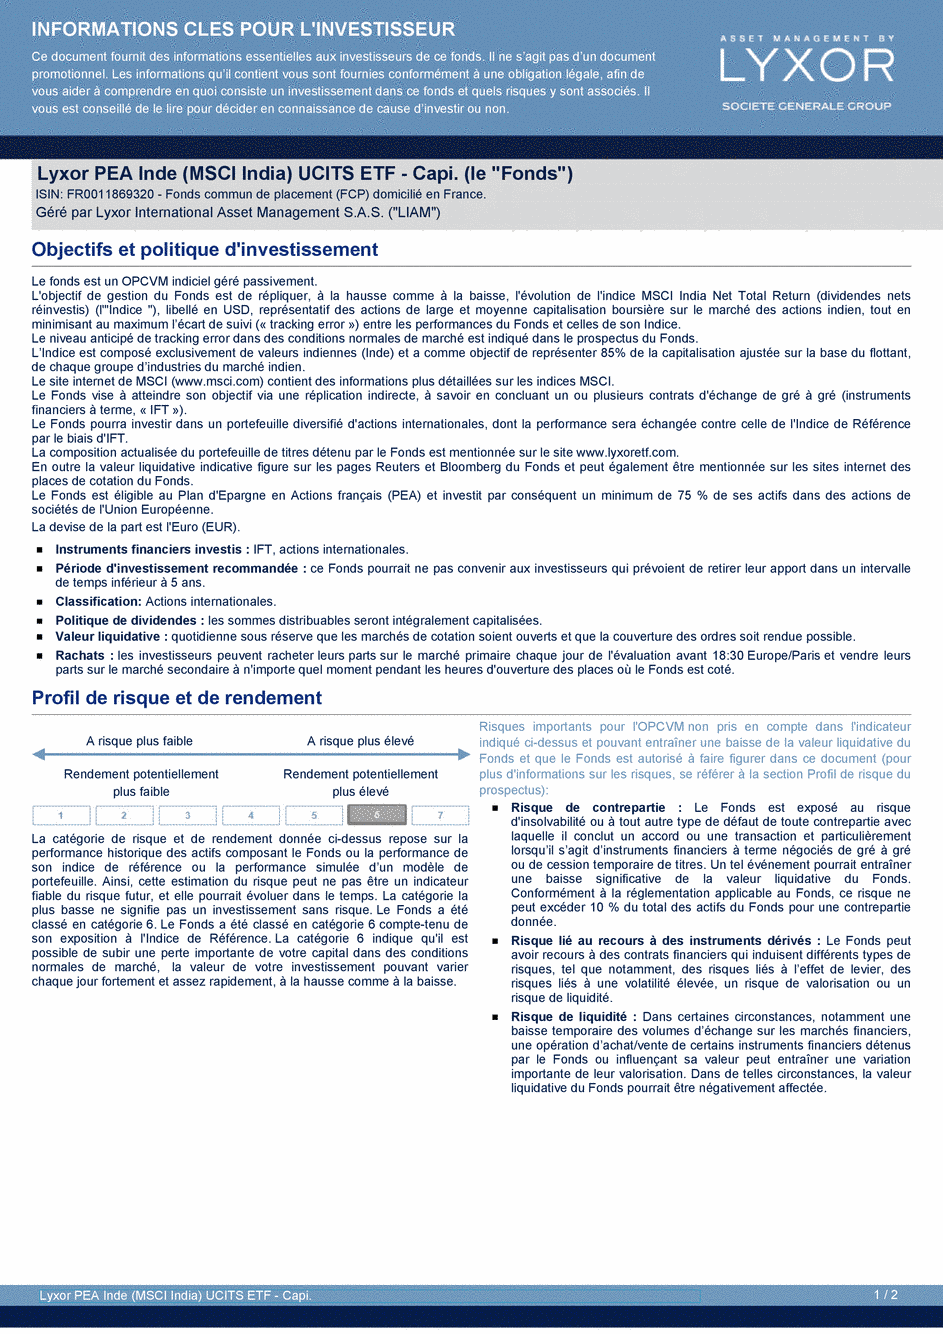 DICI Lyxor PEA Inde (MSCI India) UCITS ETF - Capi. - 21/07/2020 - Français